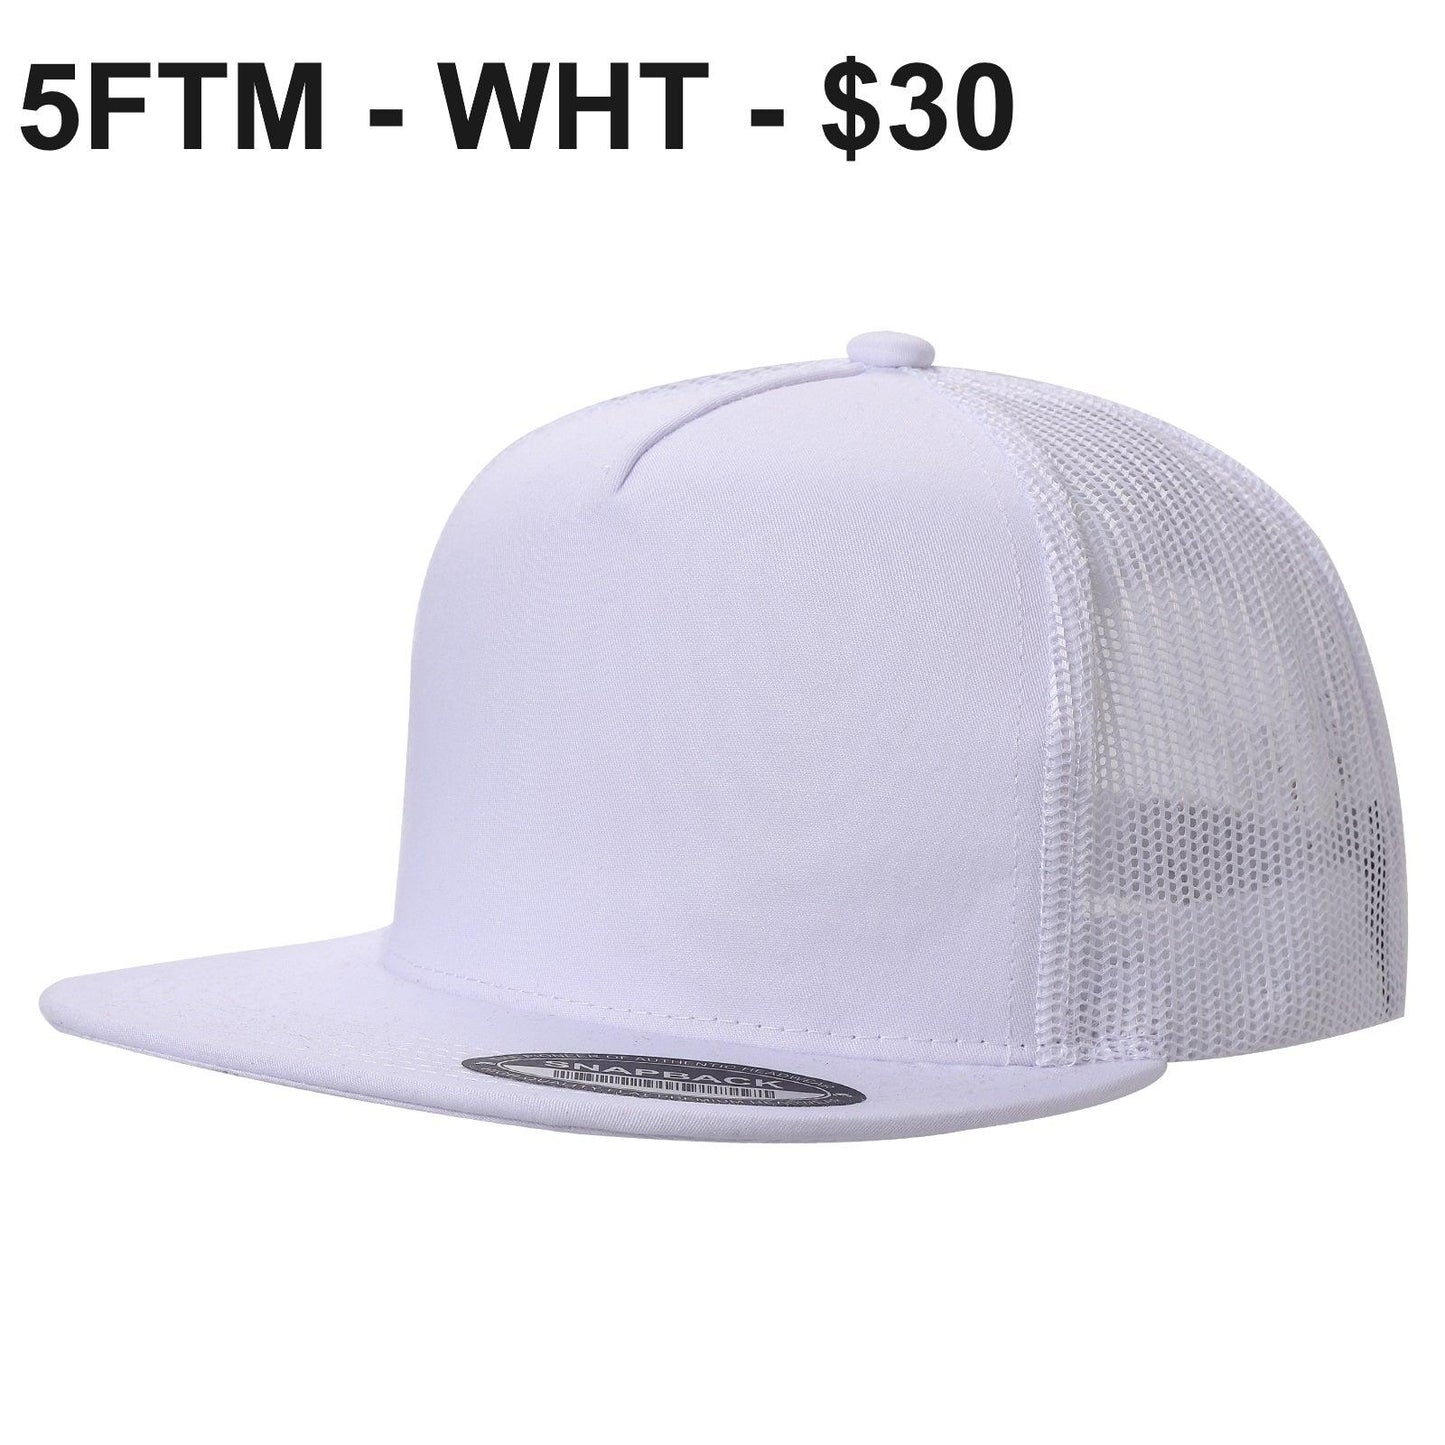 5TFTM - Tencel Solid & 2-Tone Hat - Waycap INC